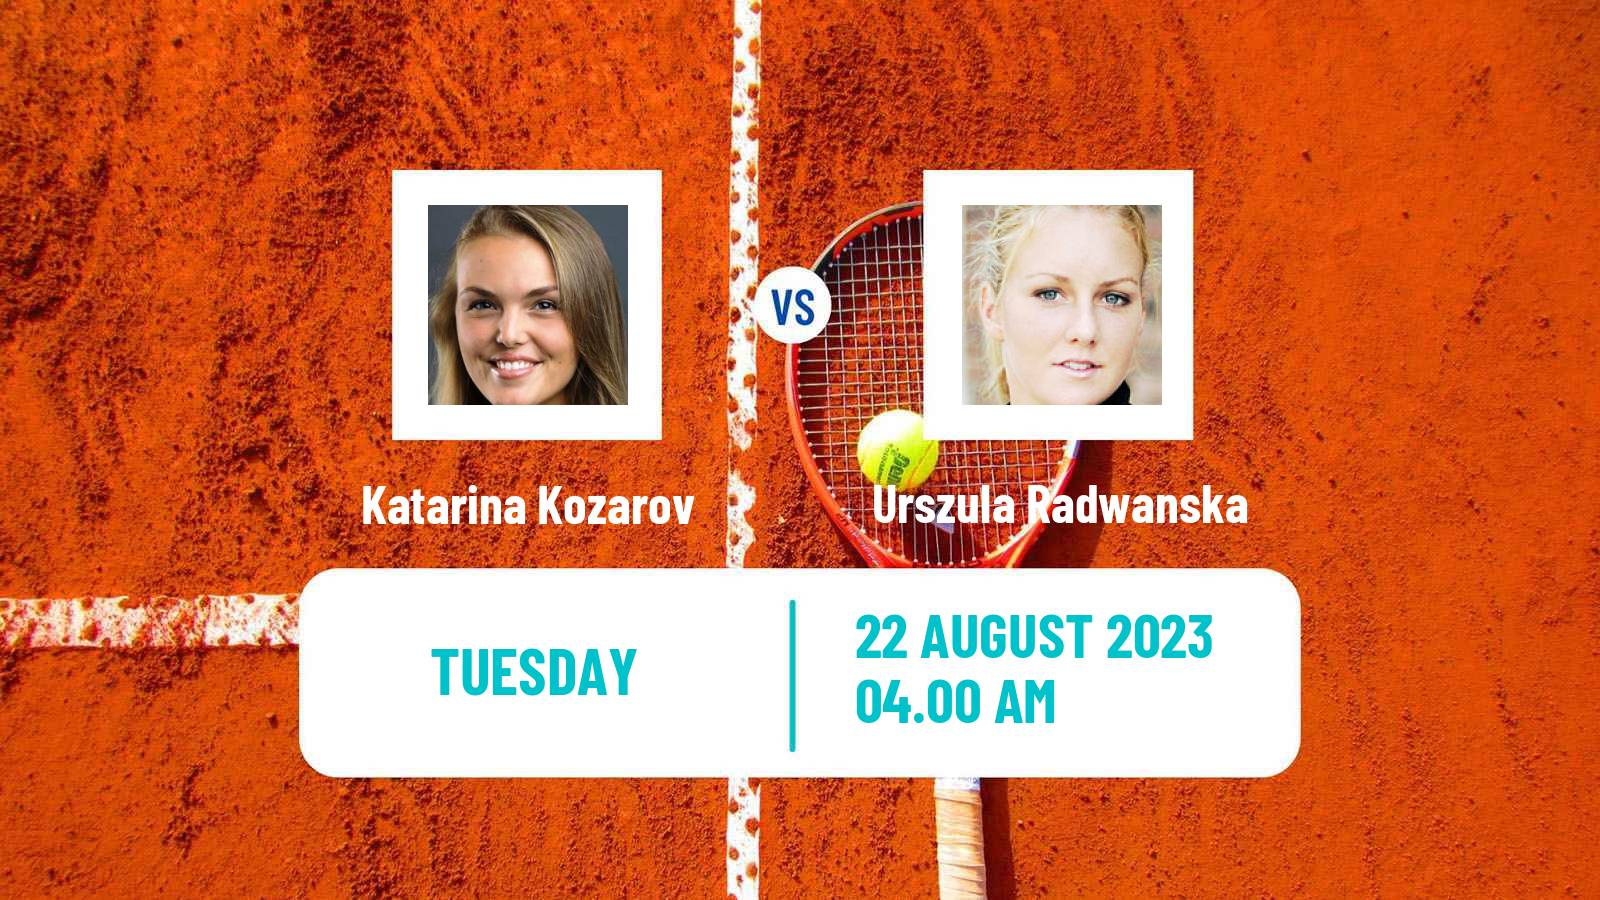 Tennis ITF W25 Vigo Women Katarina Kozarov - Urszula Radwanska